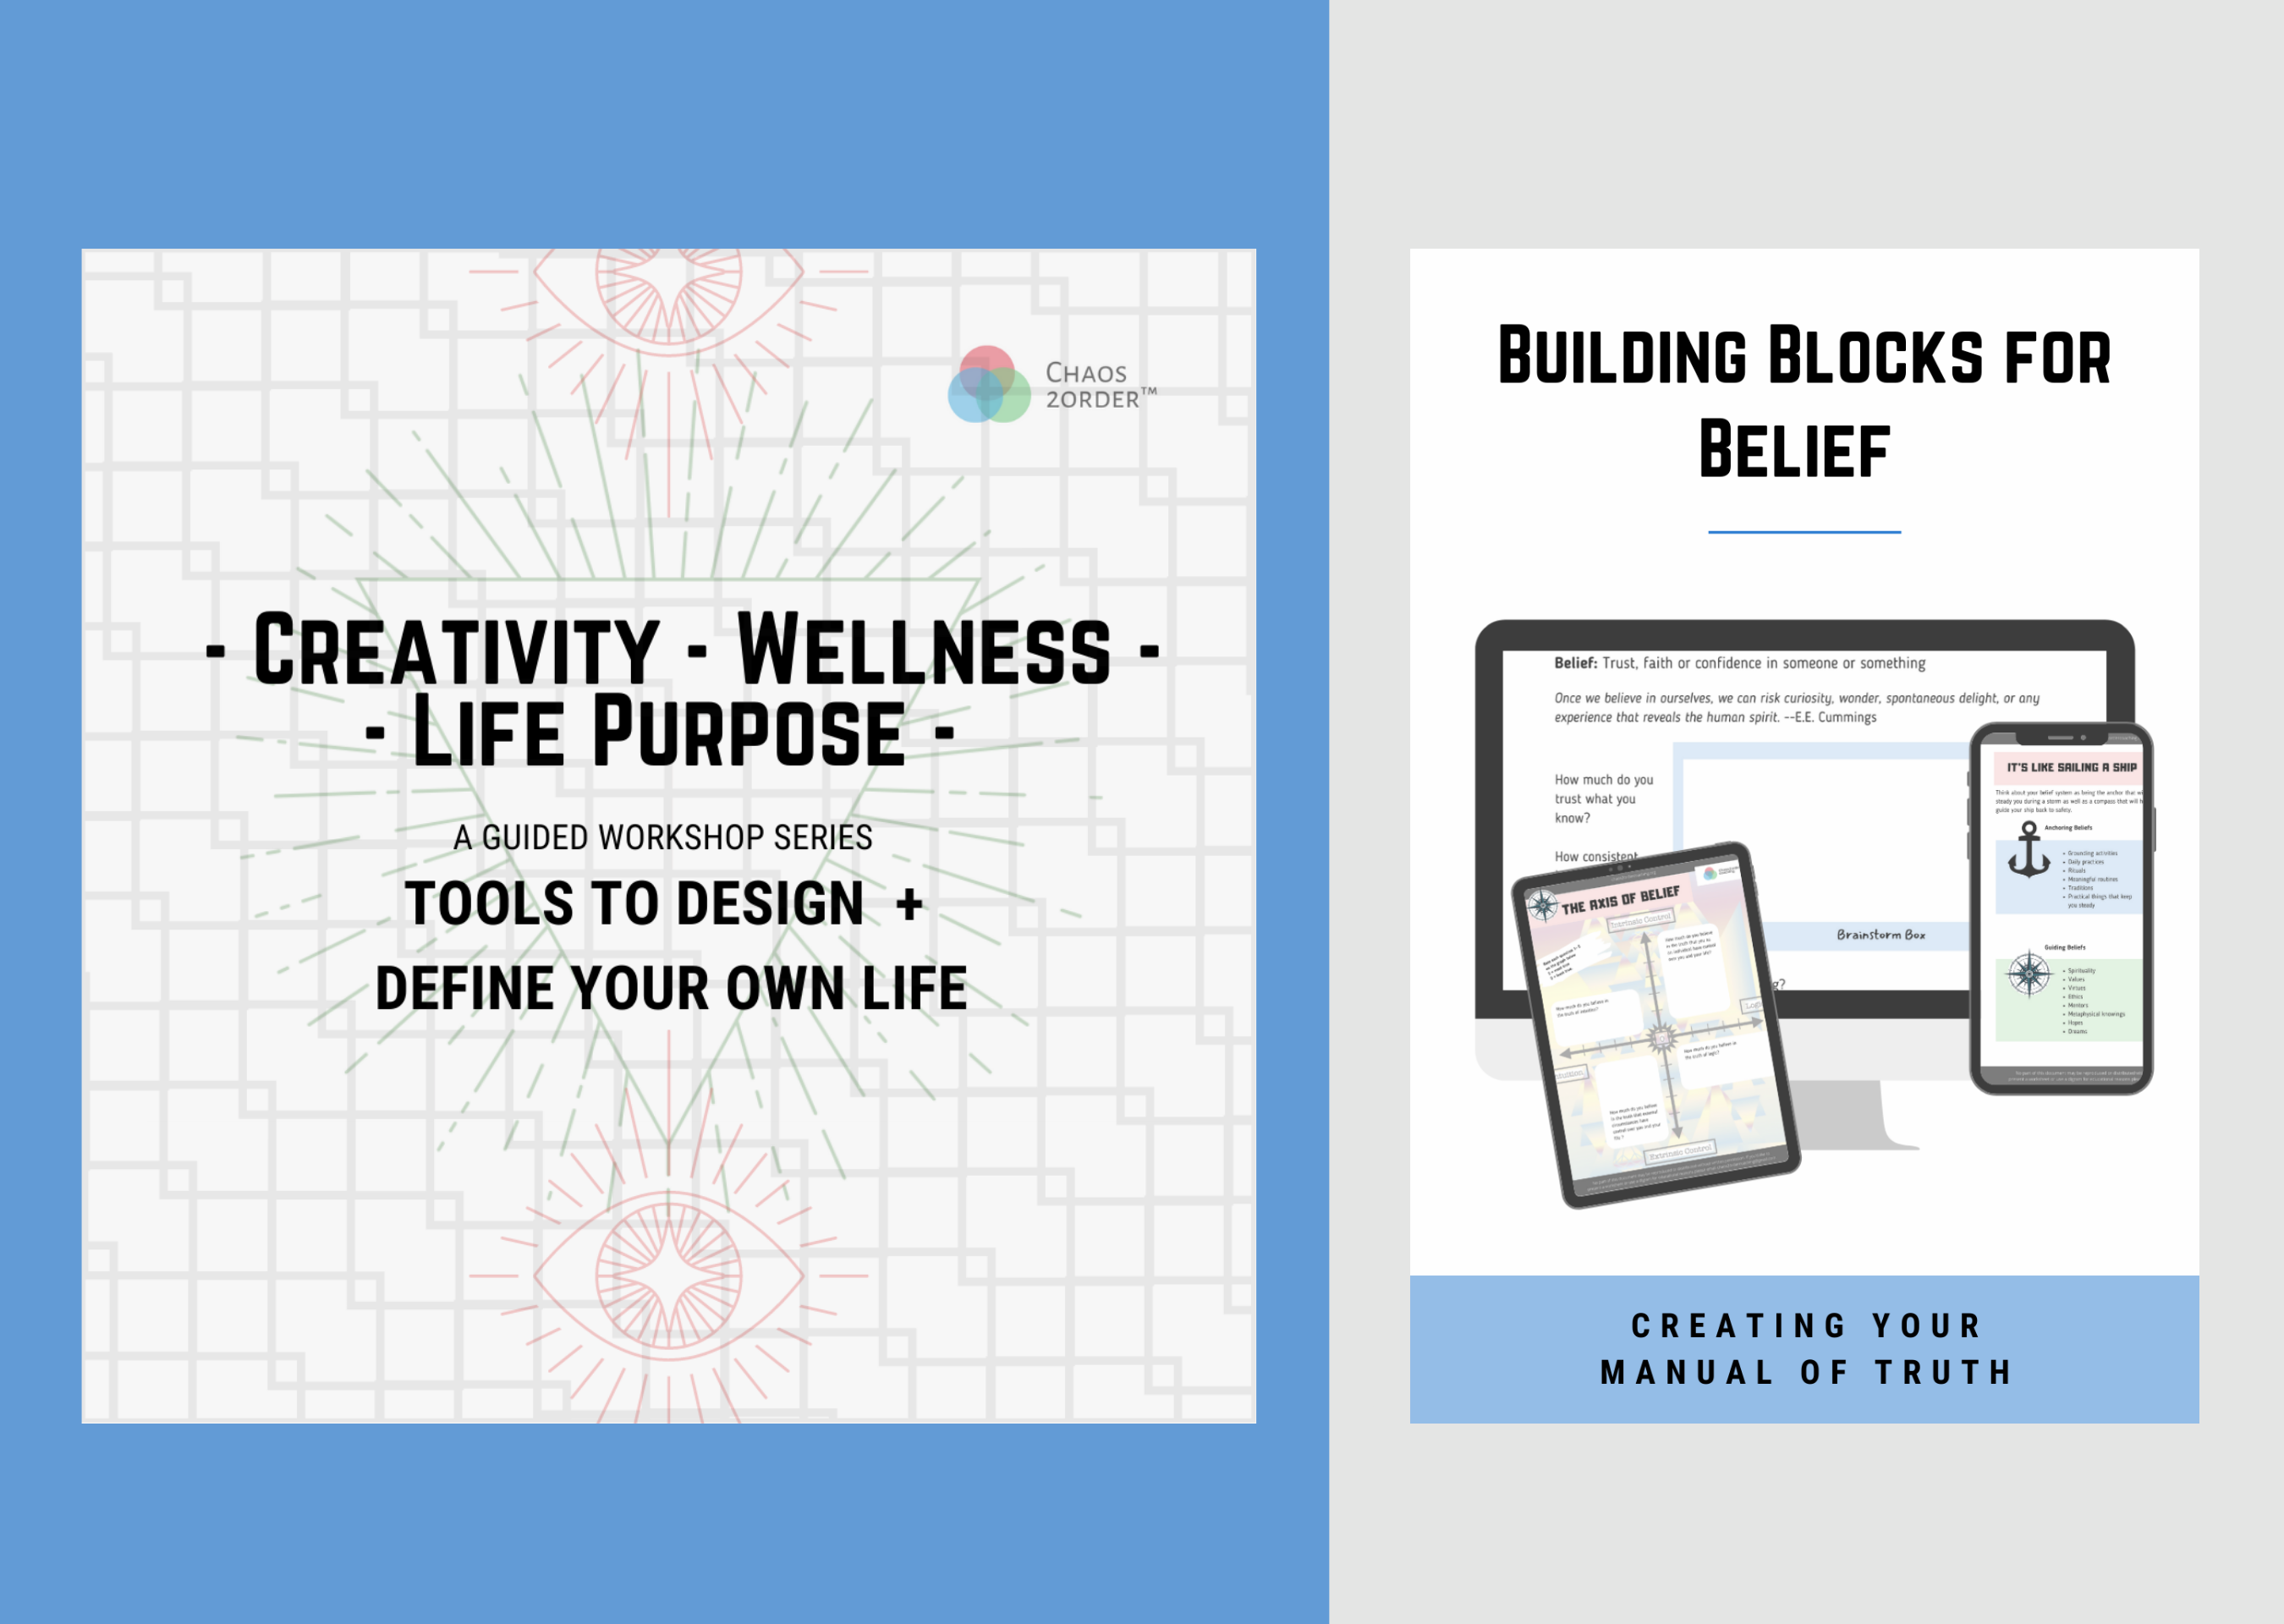 Creativity - Wellness - Life Purpose Workshop Series, The Building Blocks of Belief